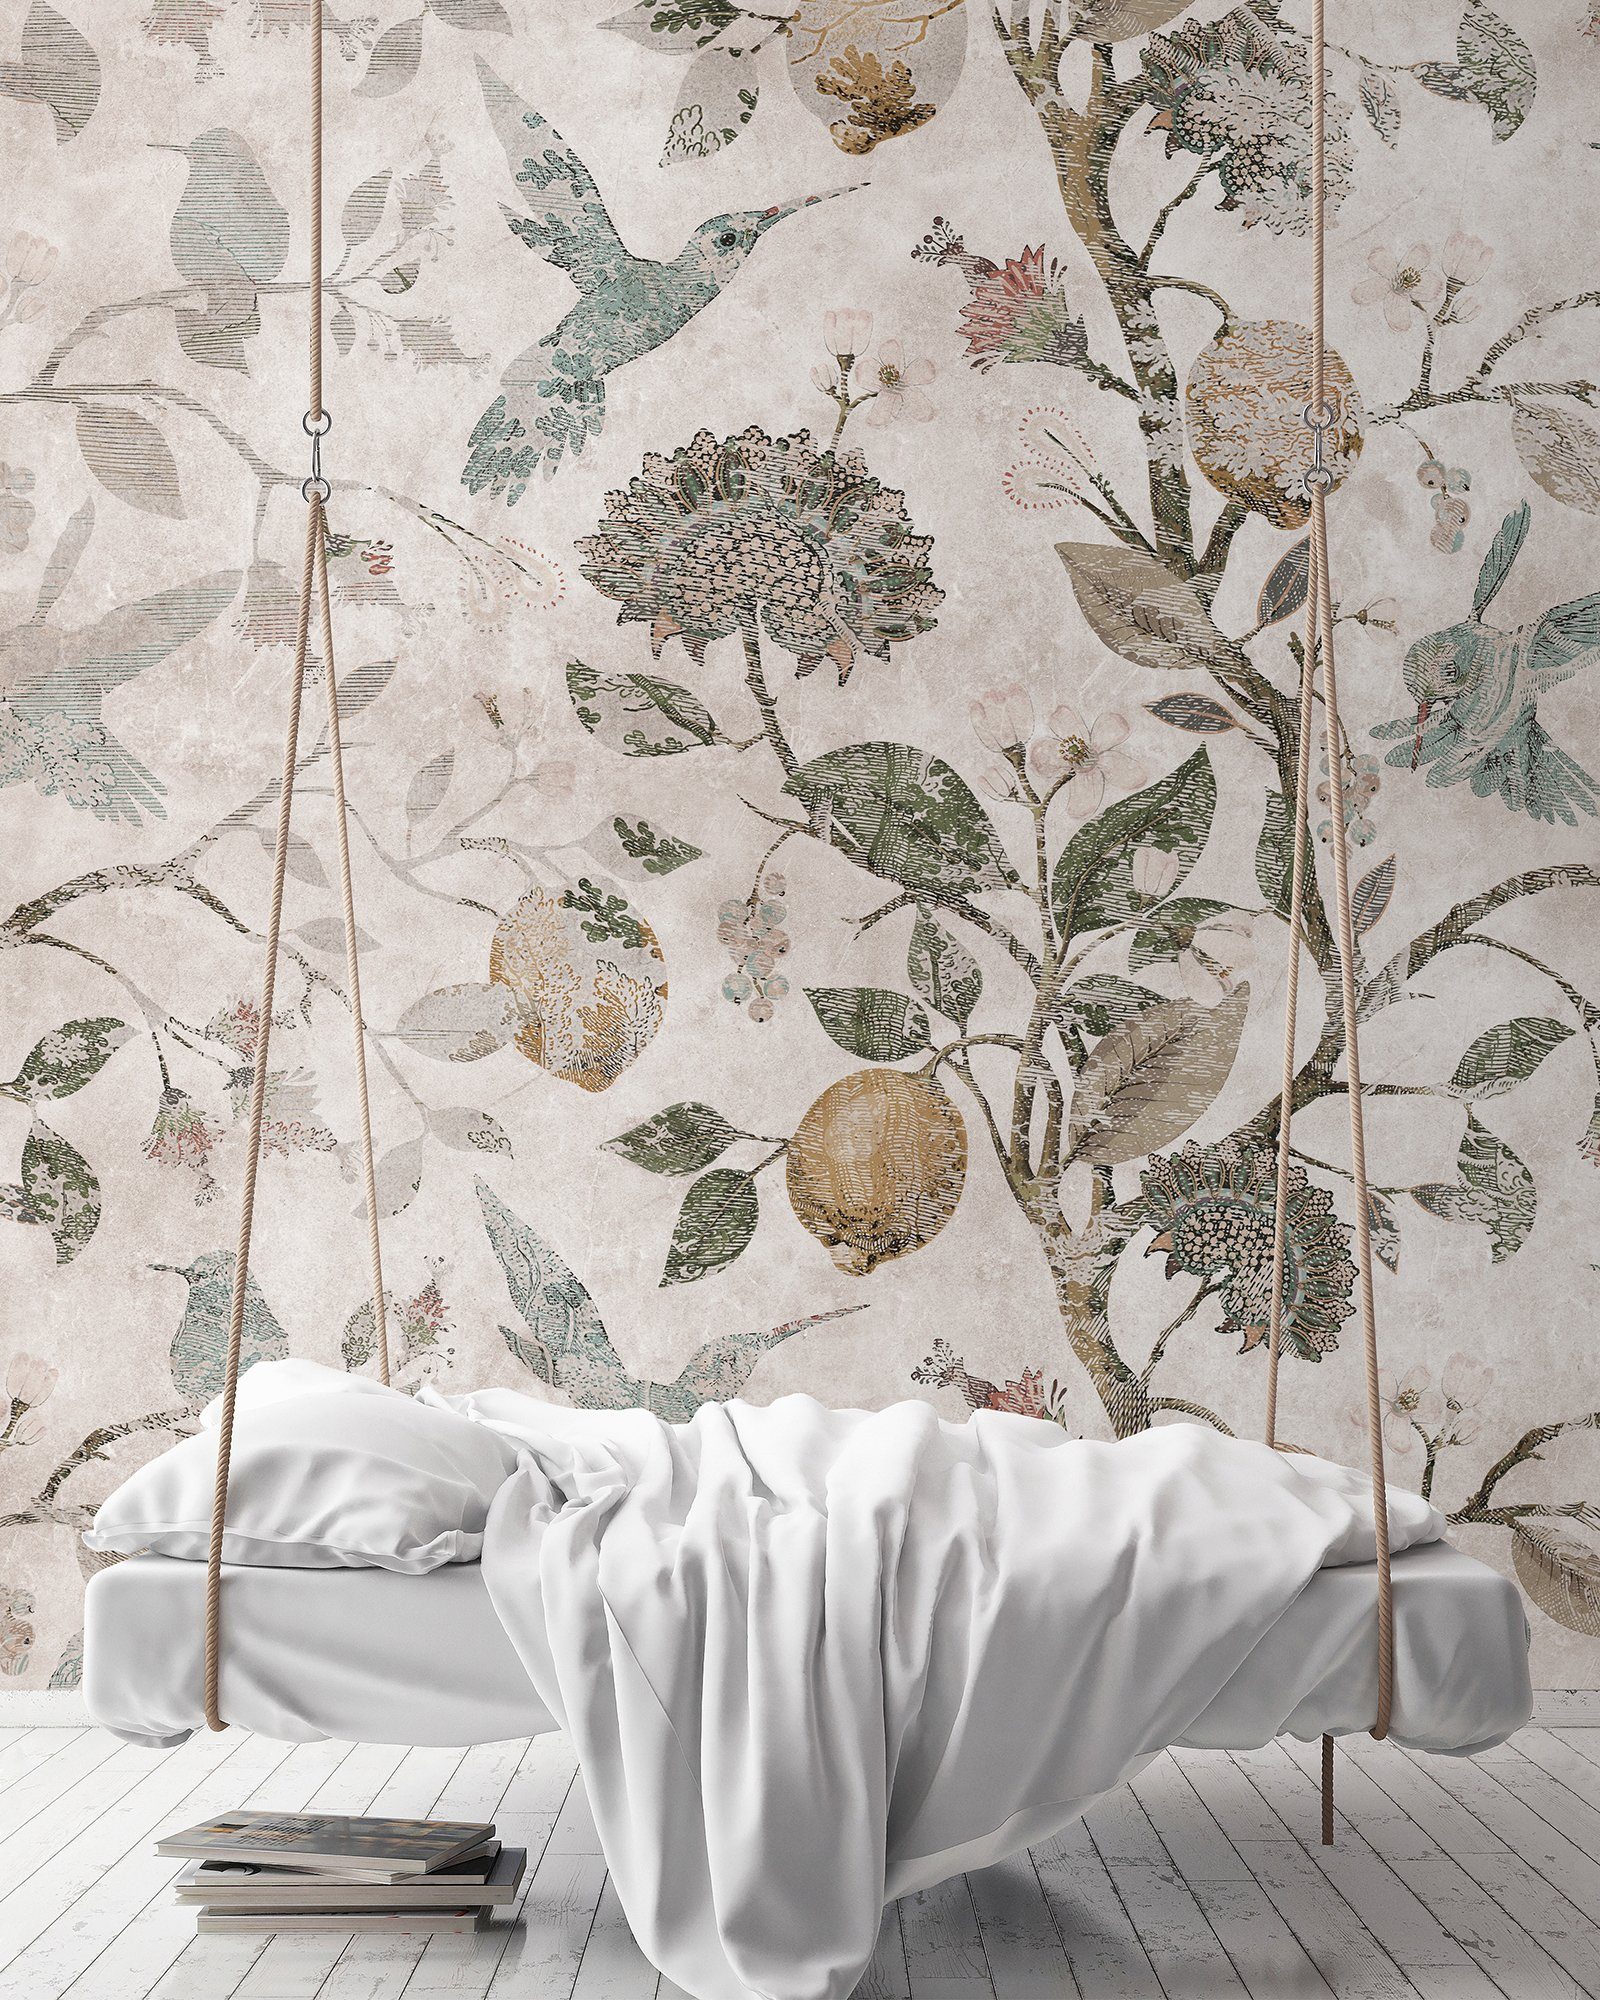 Walls beige-braun In Lemontree, Vlies, walls Wand glatt, living The Patel Fototapete by